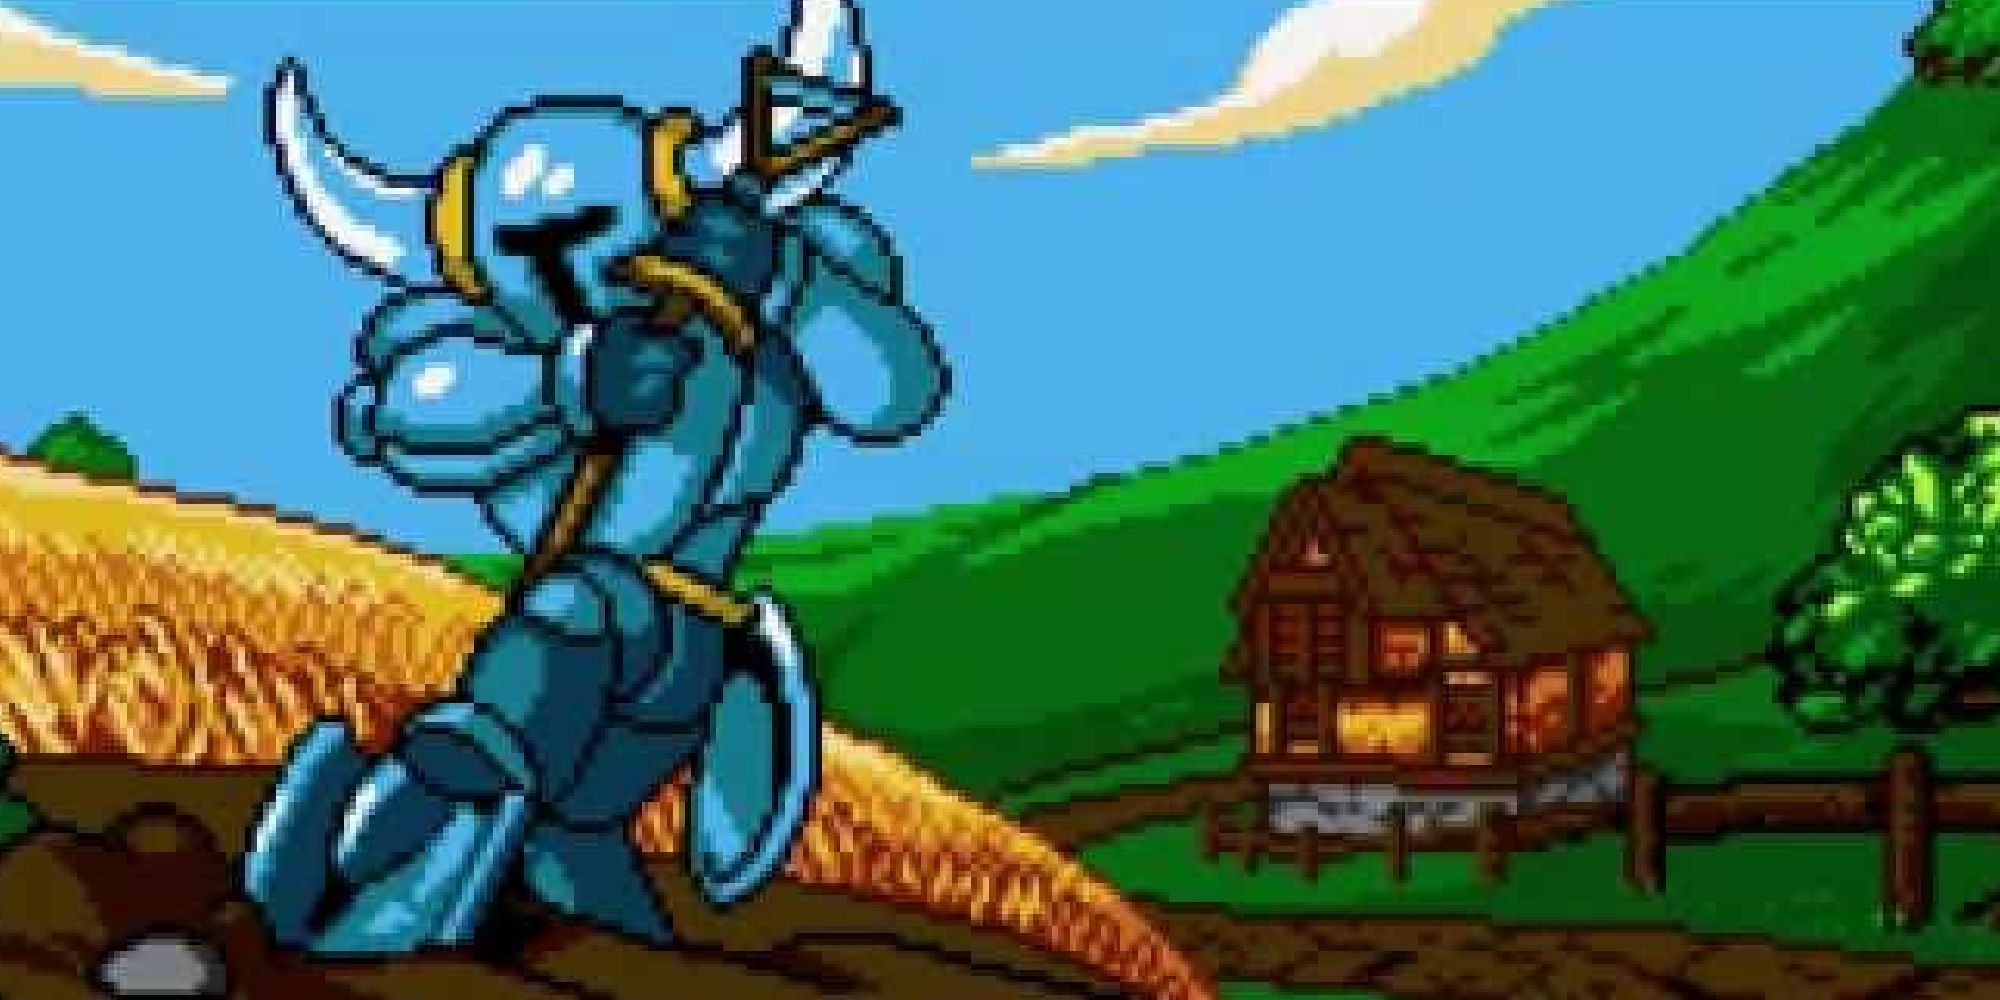 Shovel Knight working on a farm in a cutscene from Shovel Knight